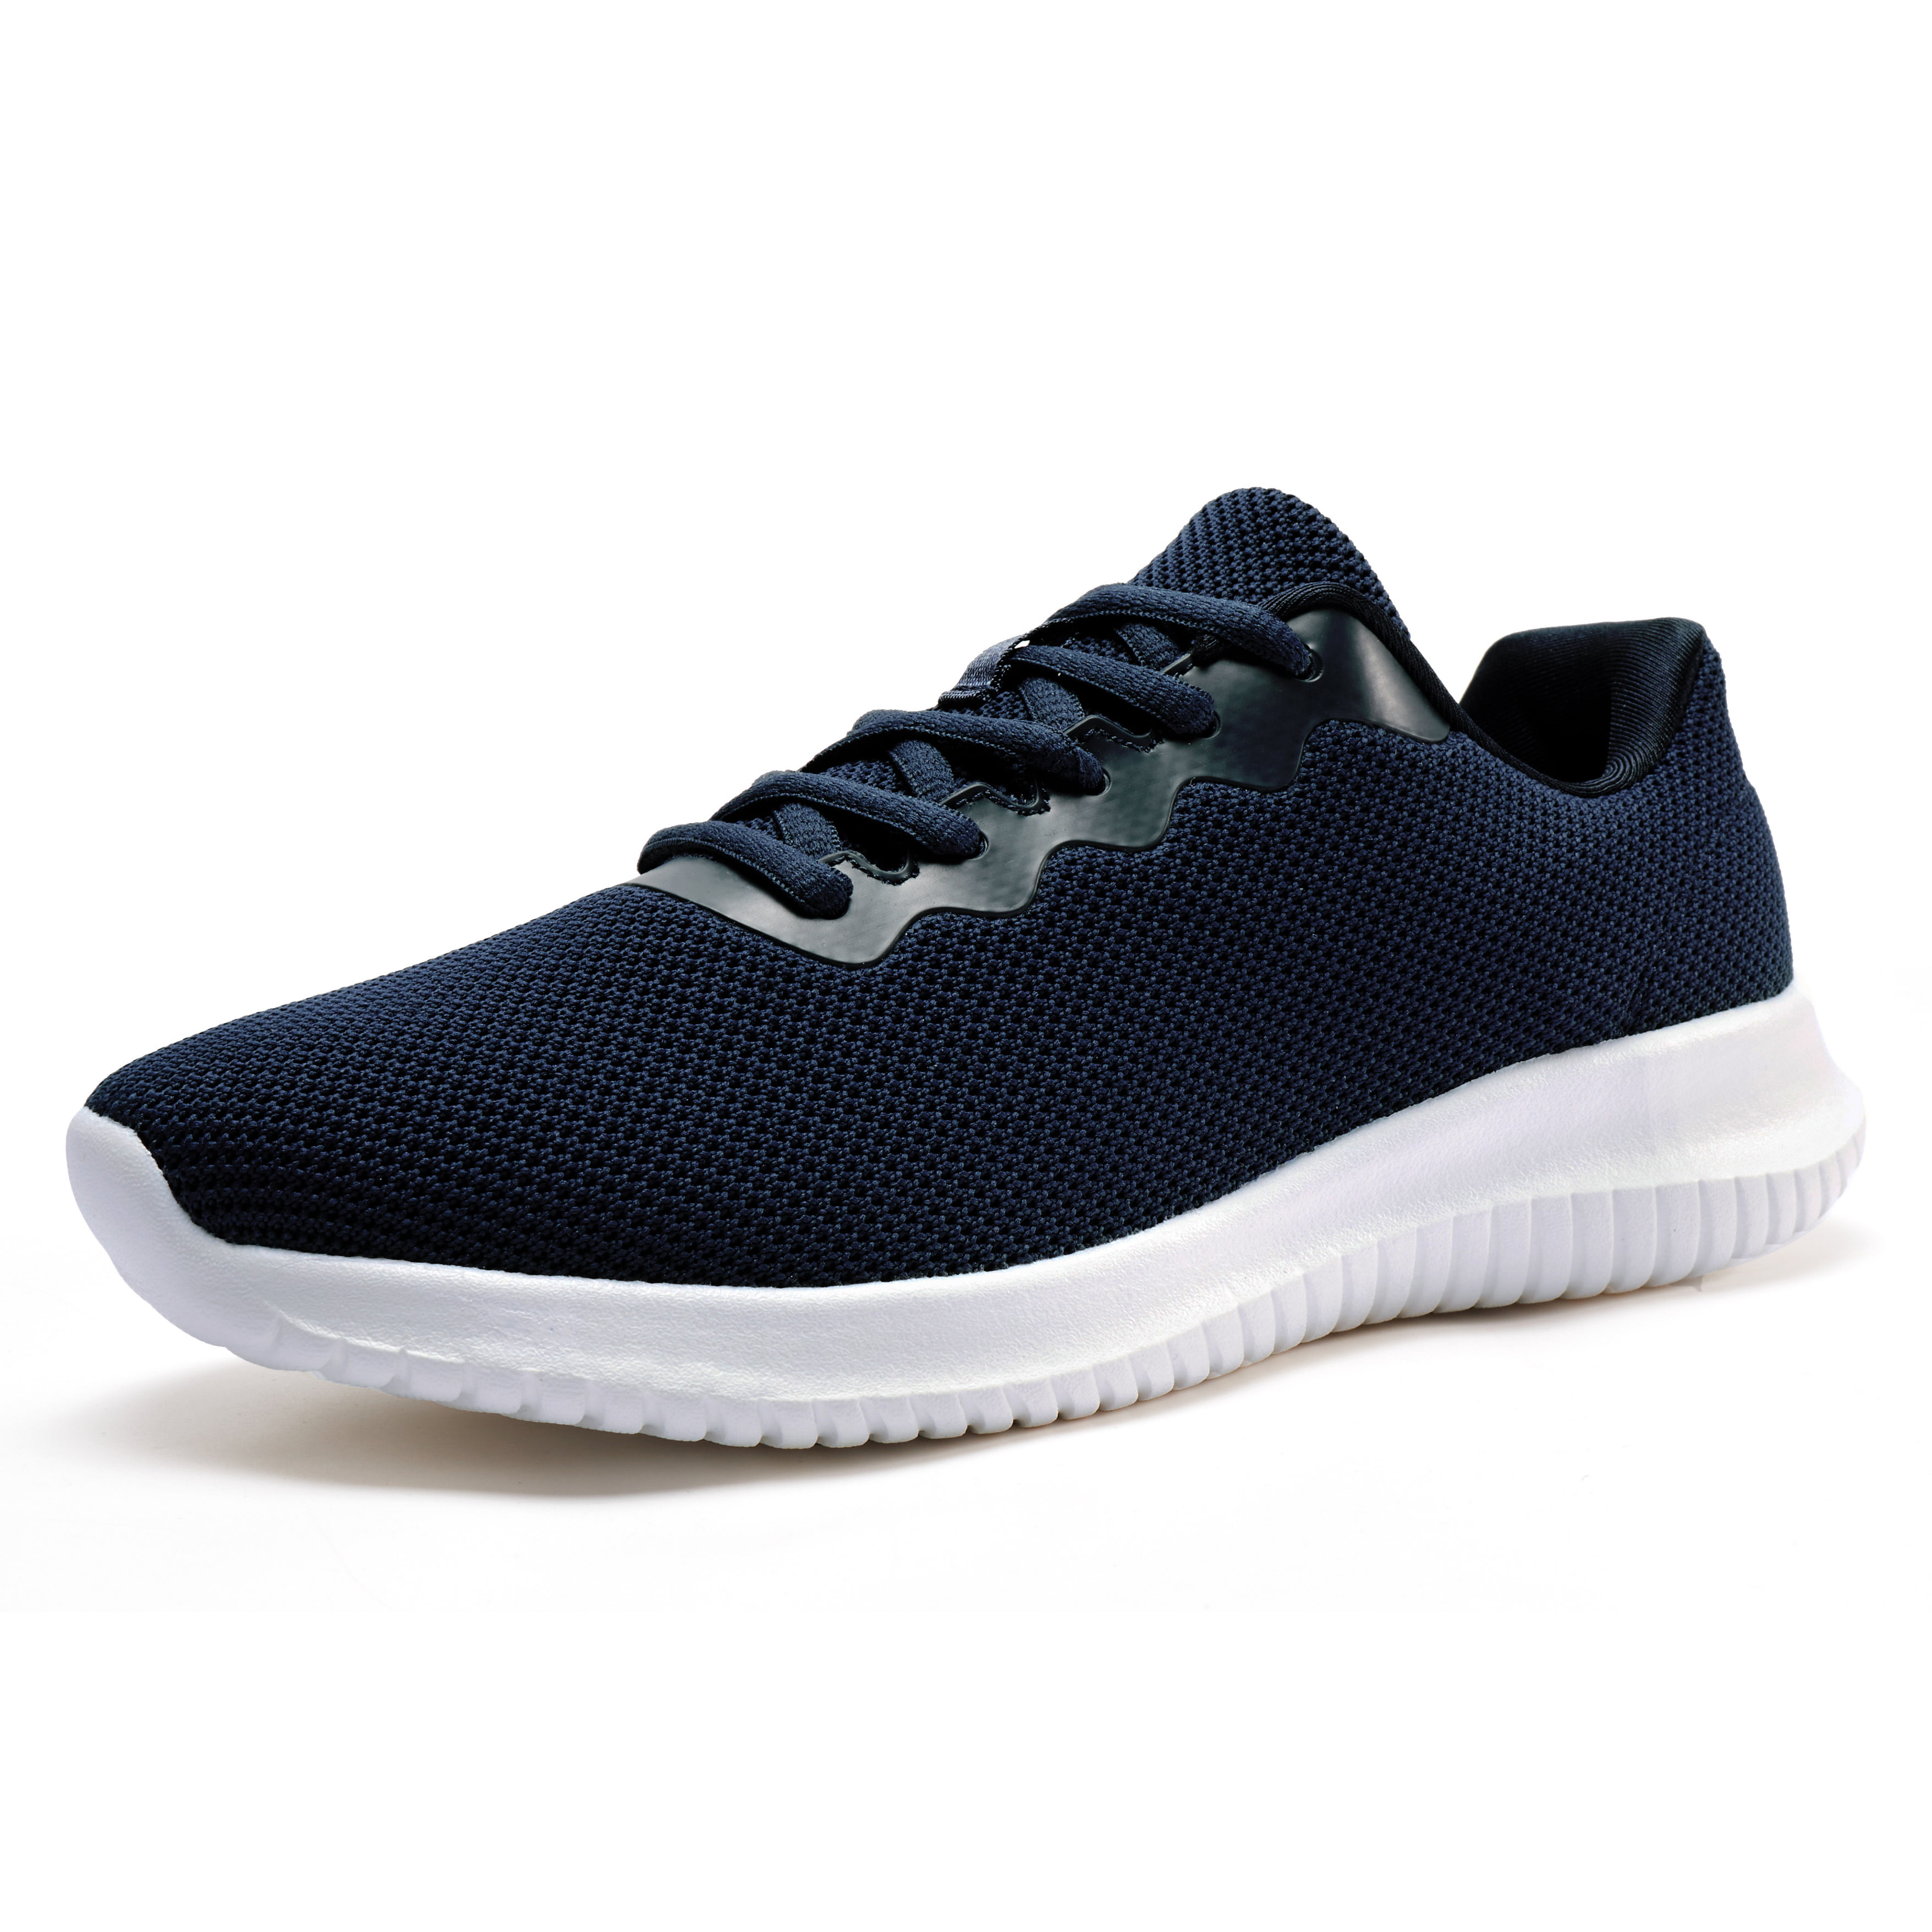 Akk Men's Tennis Shoes Lightweight Athletic Work Sneakers Blue Size 10 ...